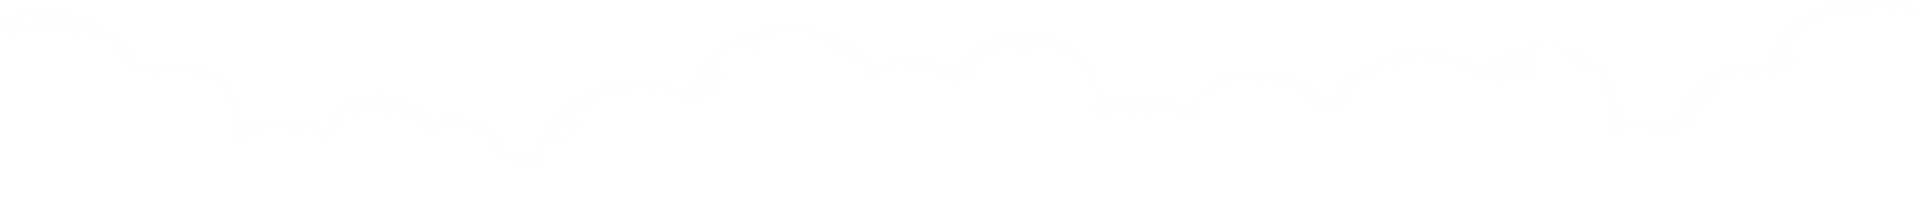 Cloud background image shape